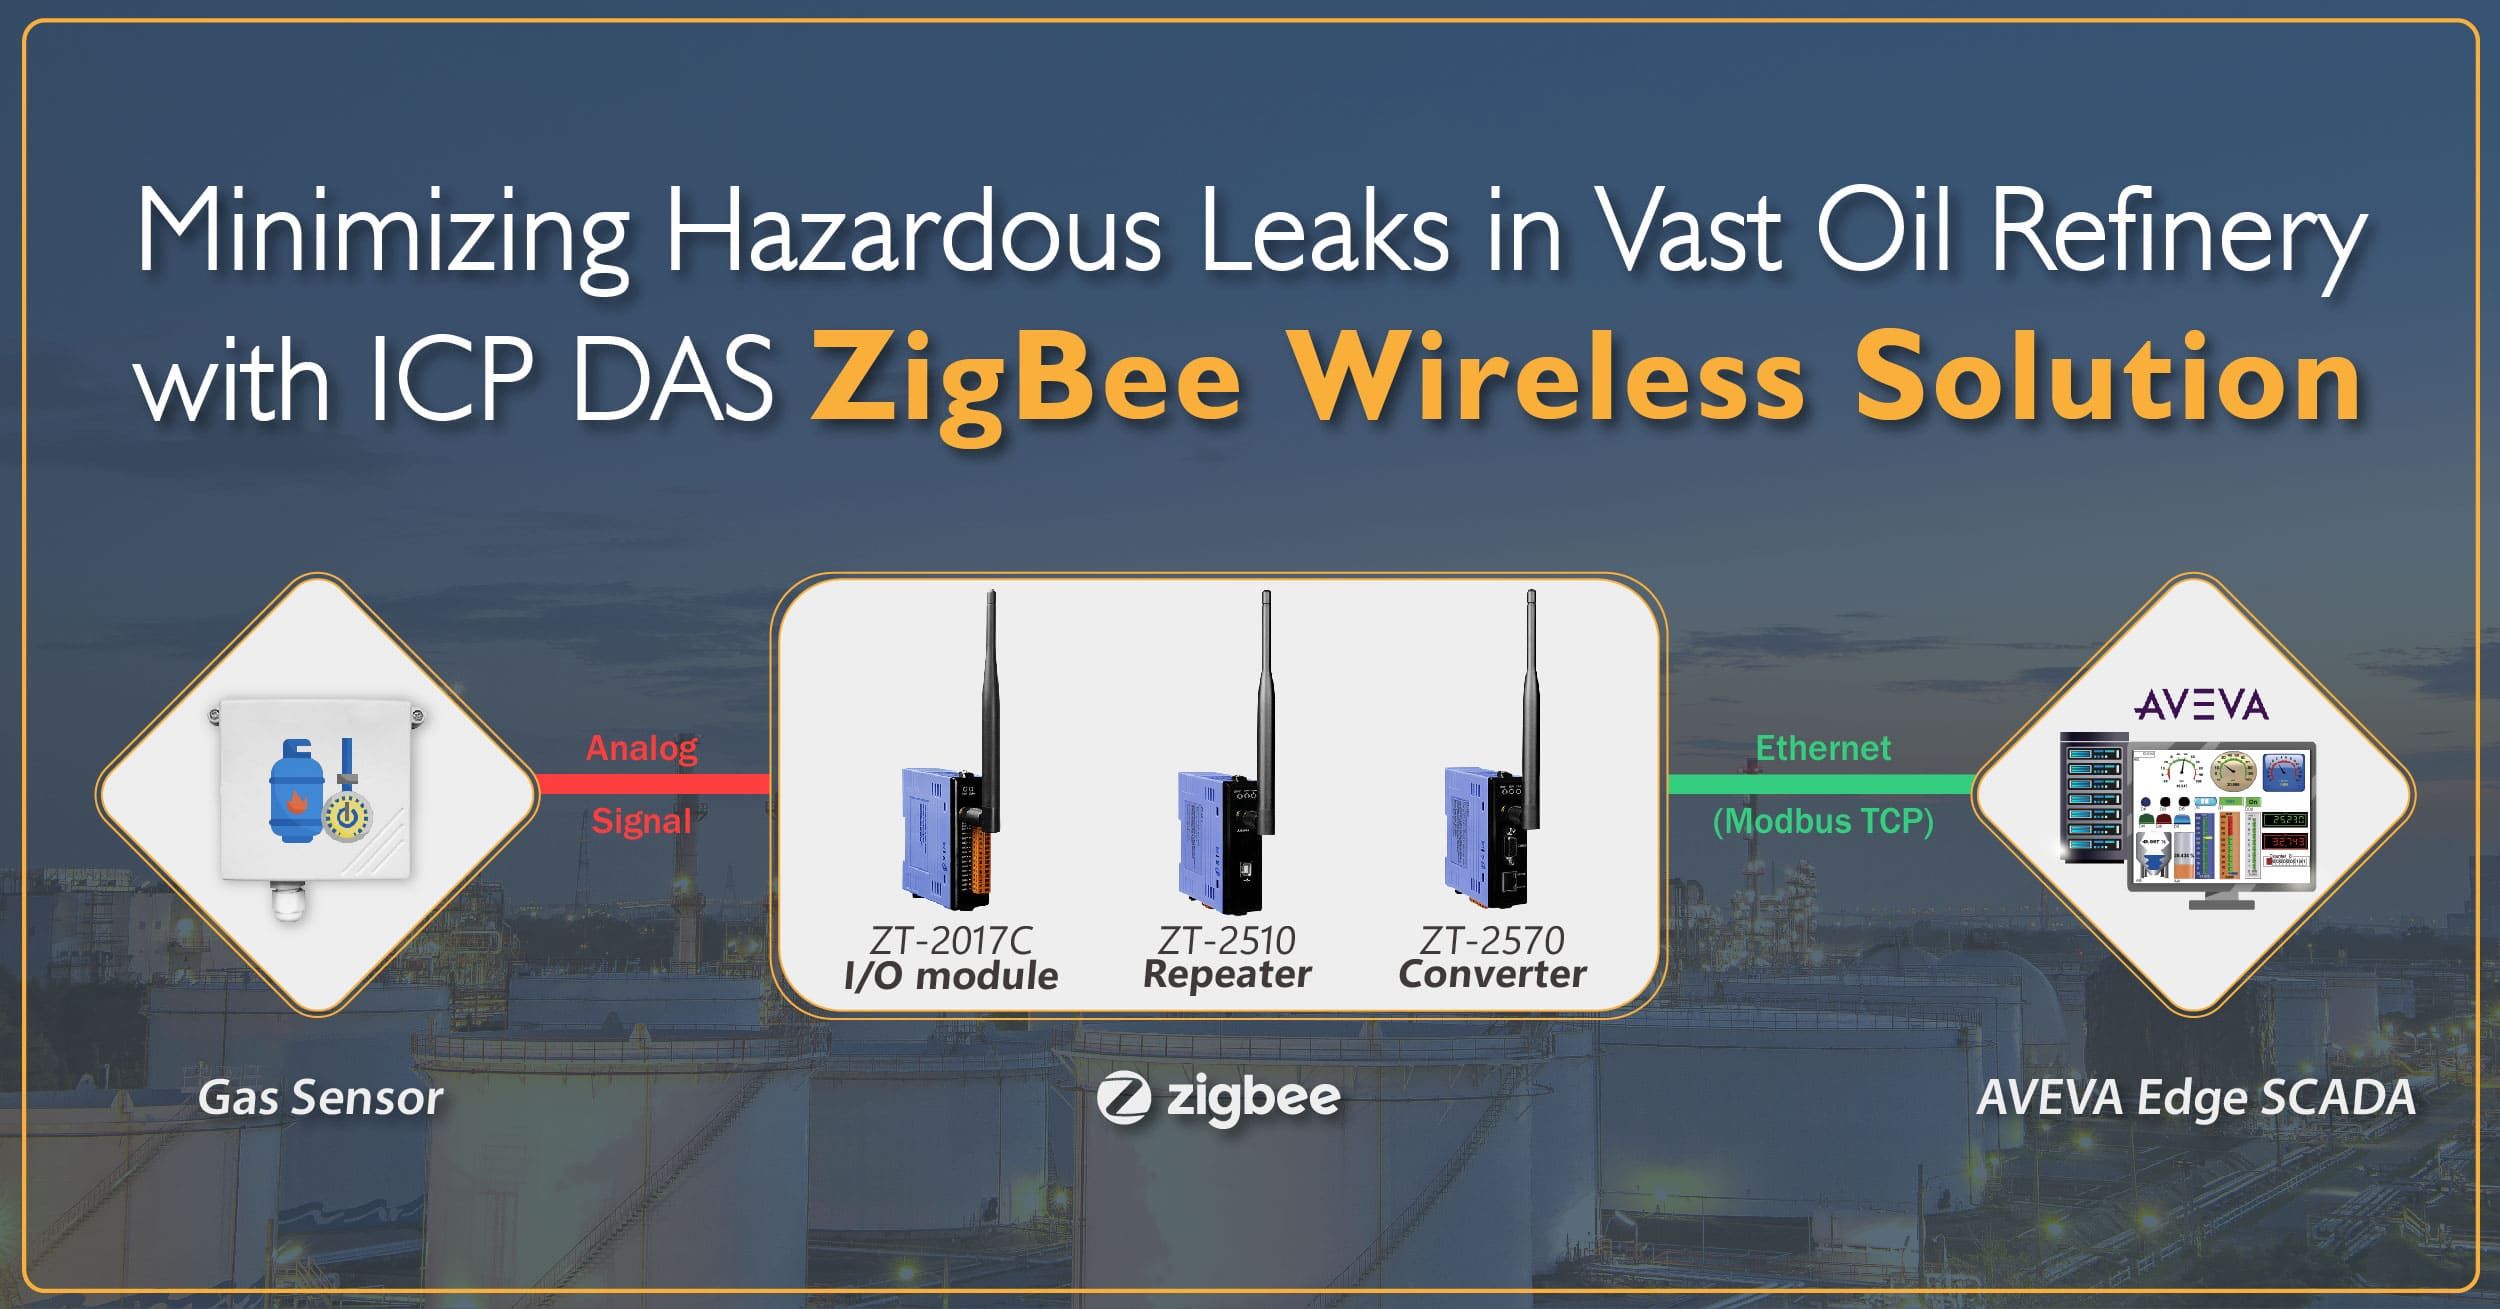 Minimizing Hazardous Leaks in Vast Oil Refinery with ICP DAS ZigBee Wireless Solution